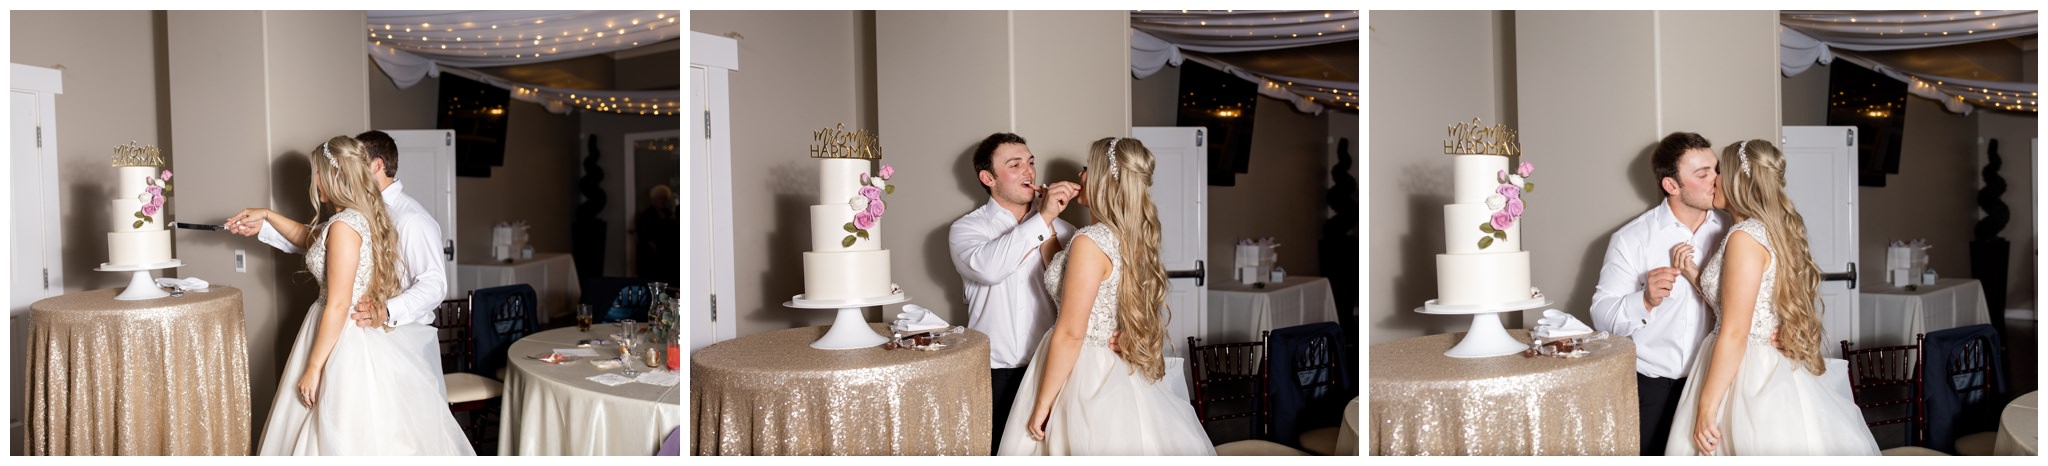 Bride and groom cutting the cake at Sleepy Ridge wedding venue